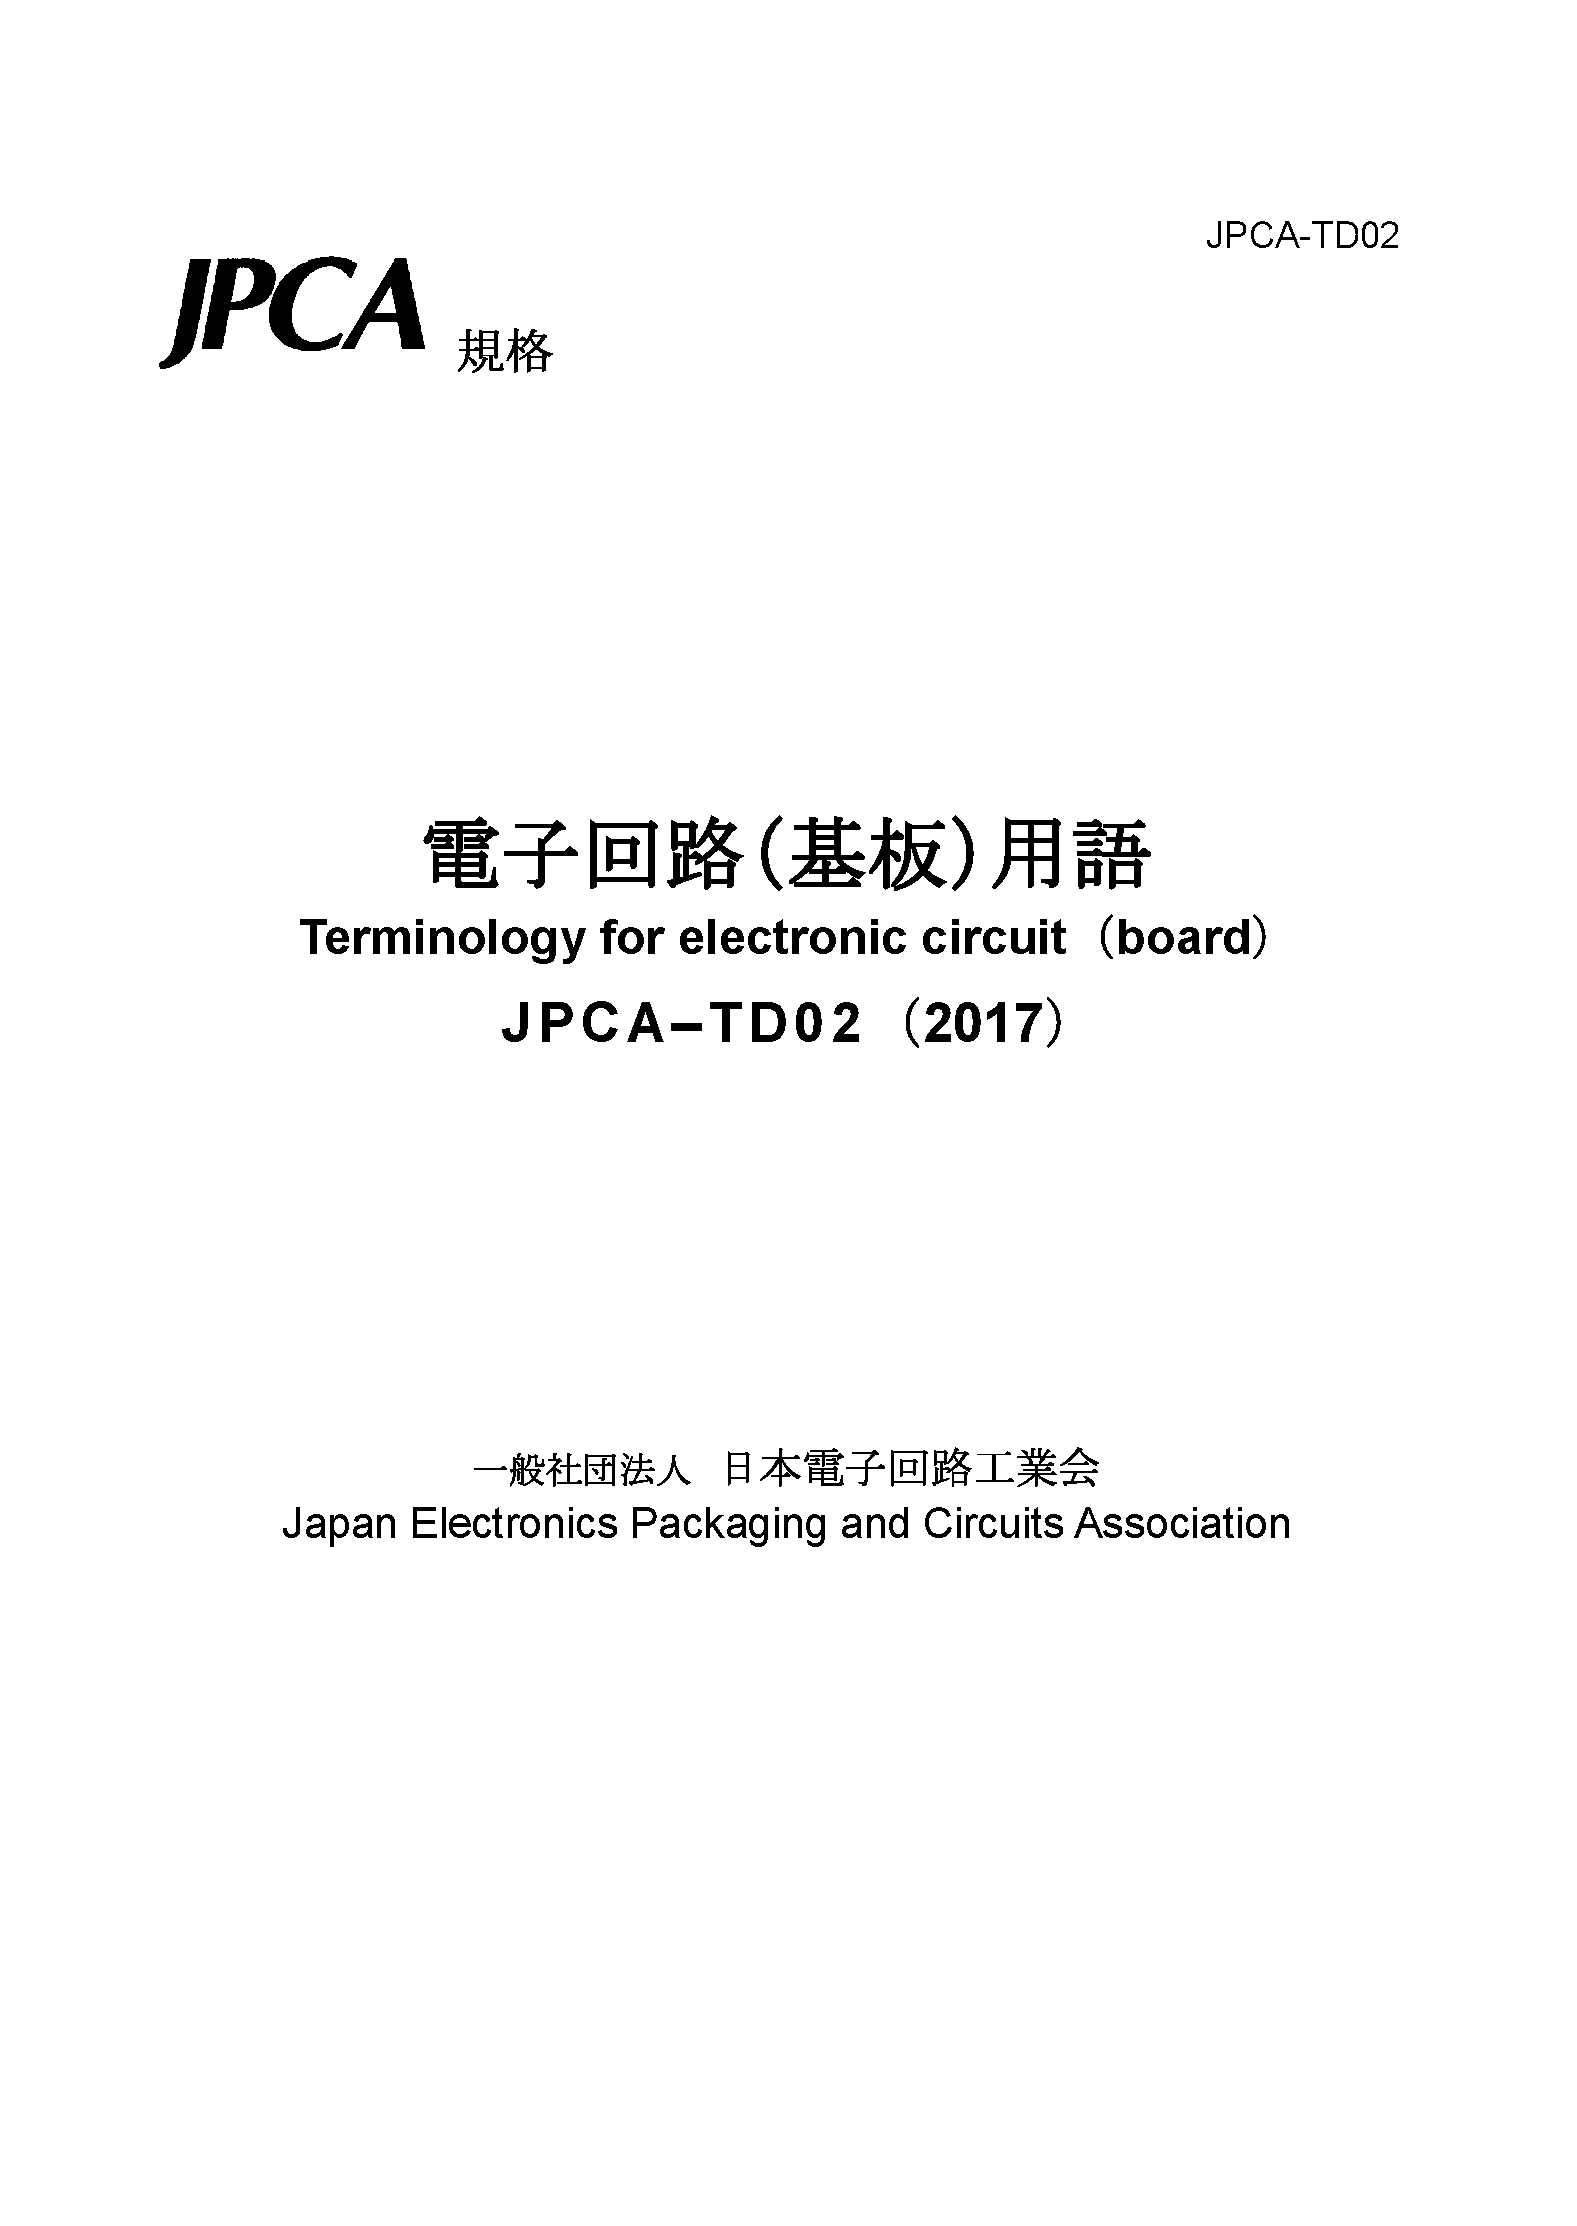 jpca-td02-2017